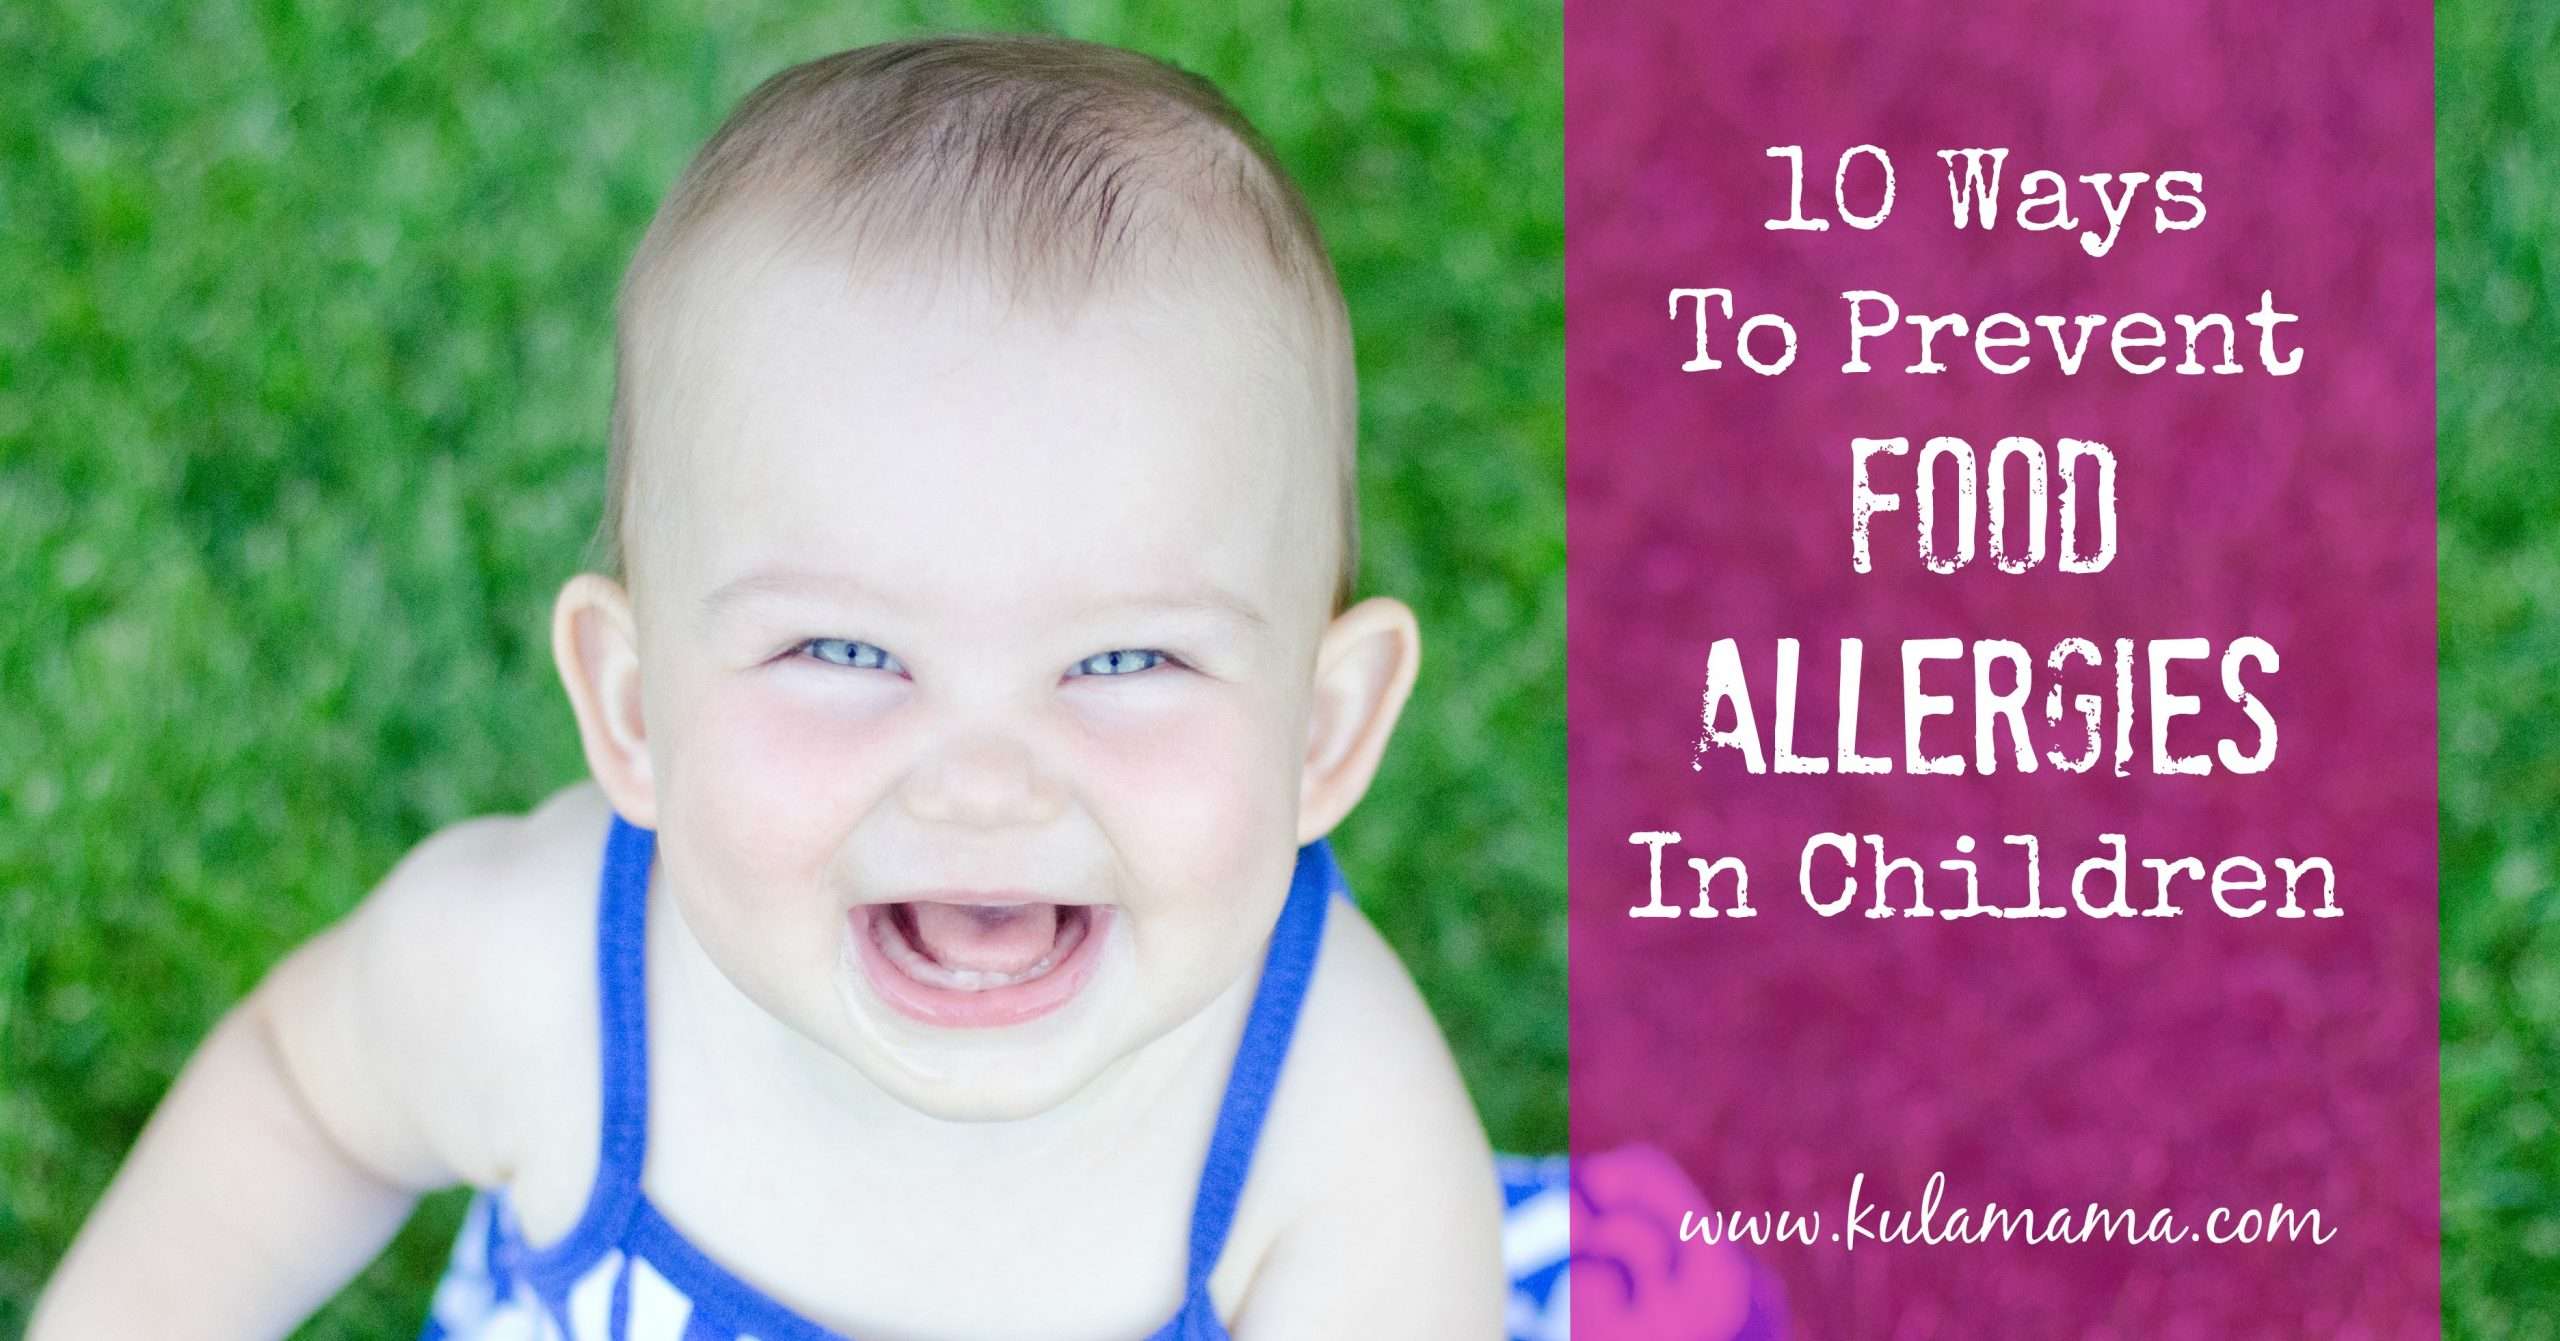 10 Ways to Prevent Food Allergies in Children